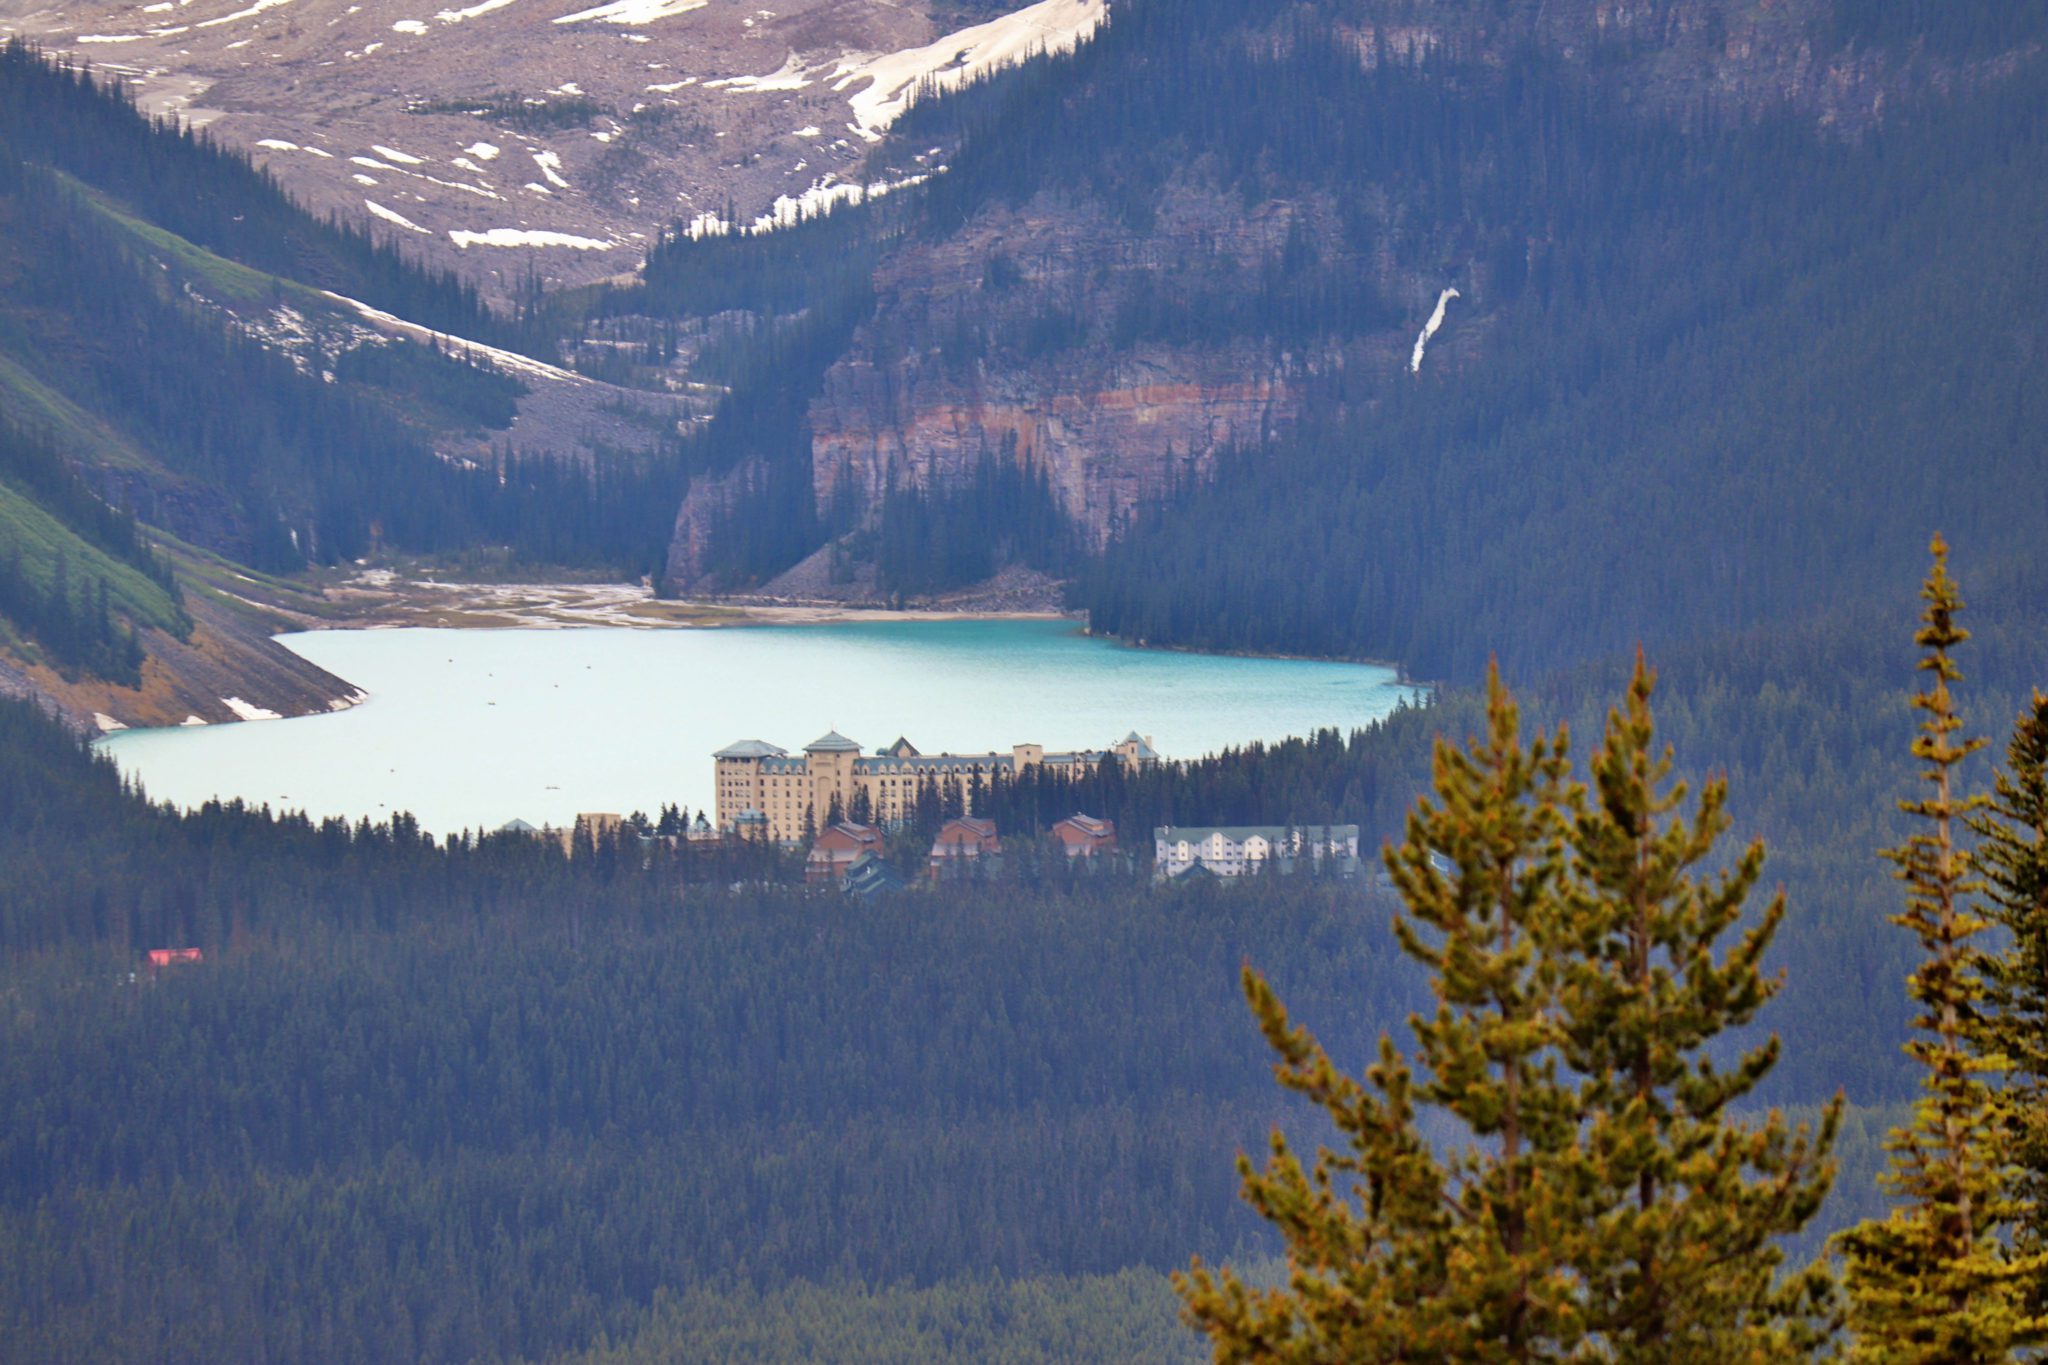 Banff Photography Guide: 15 Amazing Spots to take Photos in Banff | Lake Louise Gondola #banff #canada #simplywander #lakelouisegondola